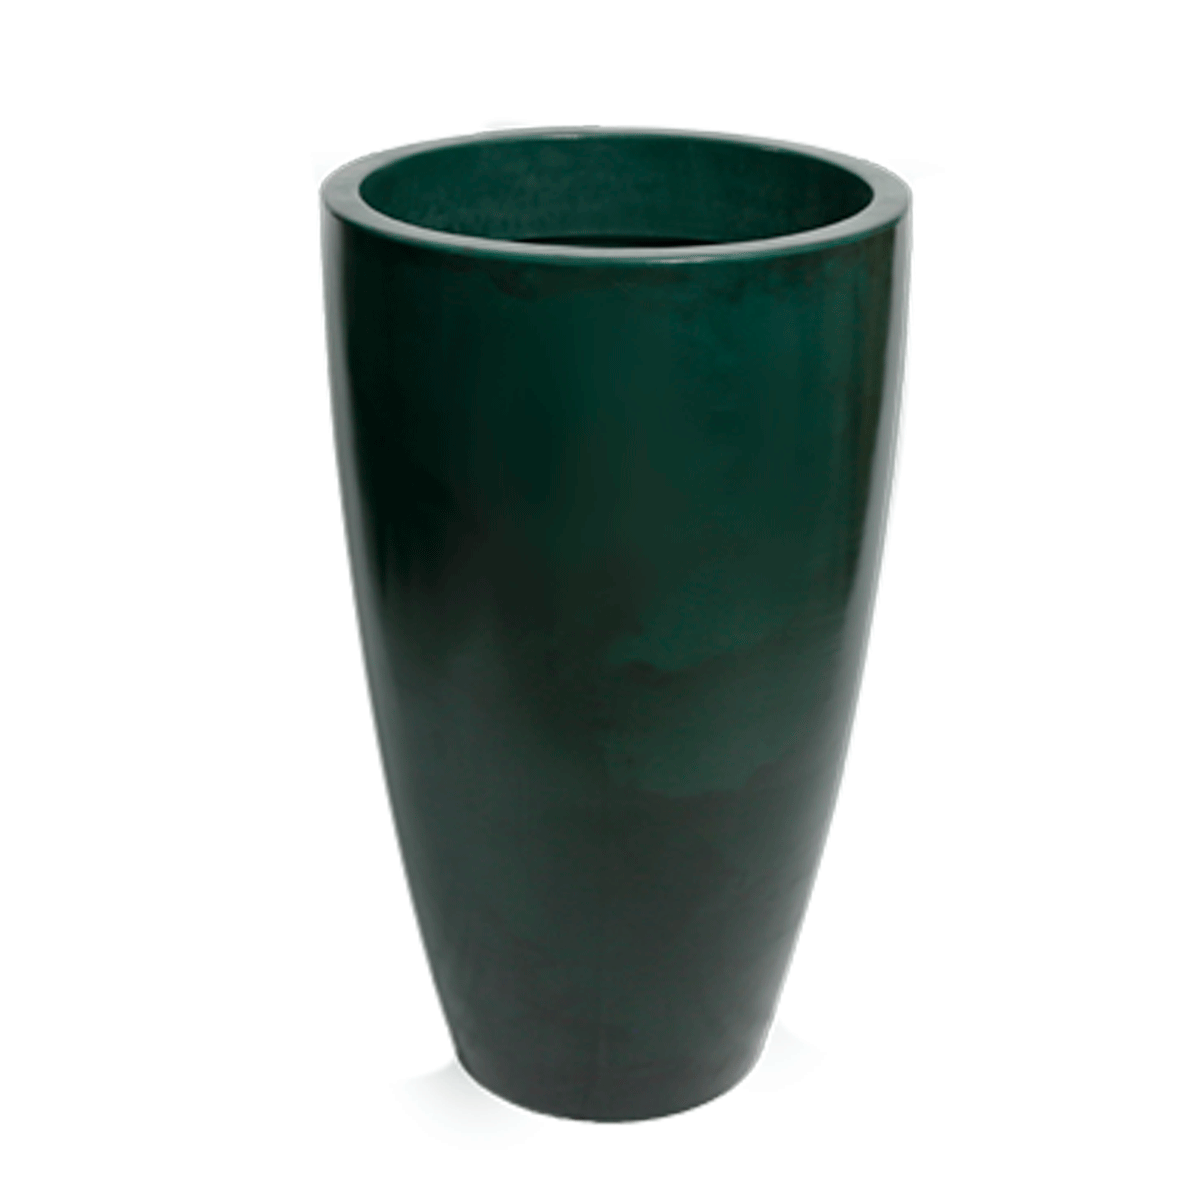 Vaso de Polietileno Redondo ALTO VERONA tam 40 x 70 cm Vasart cor Antique Verde